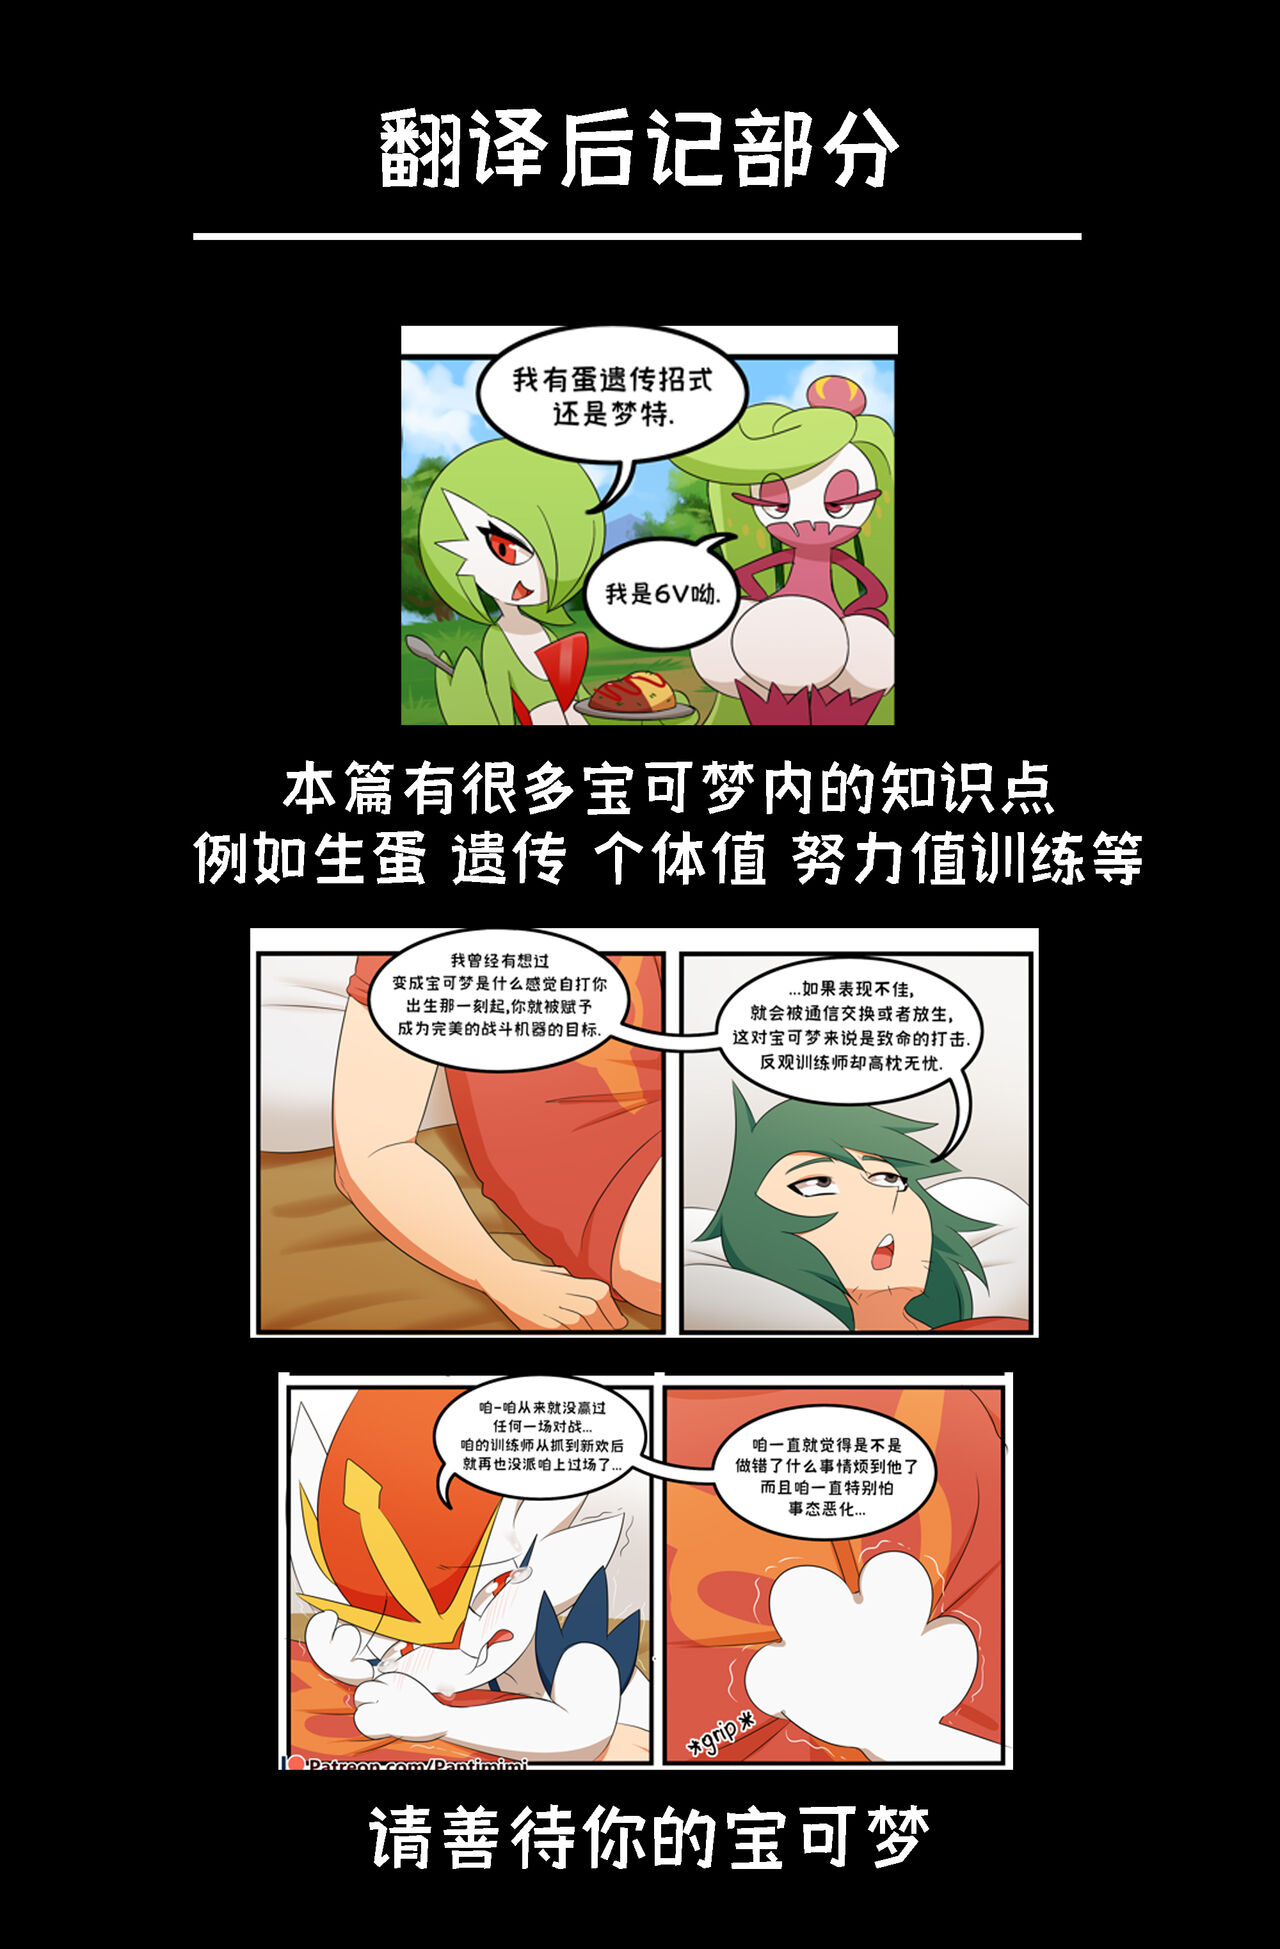 [Manene] Pokemaniac Lover (Pokémon)《真的好喜欢宝可梦啊!》 [Chinese] 